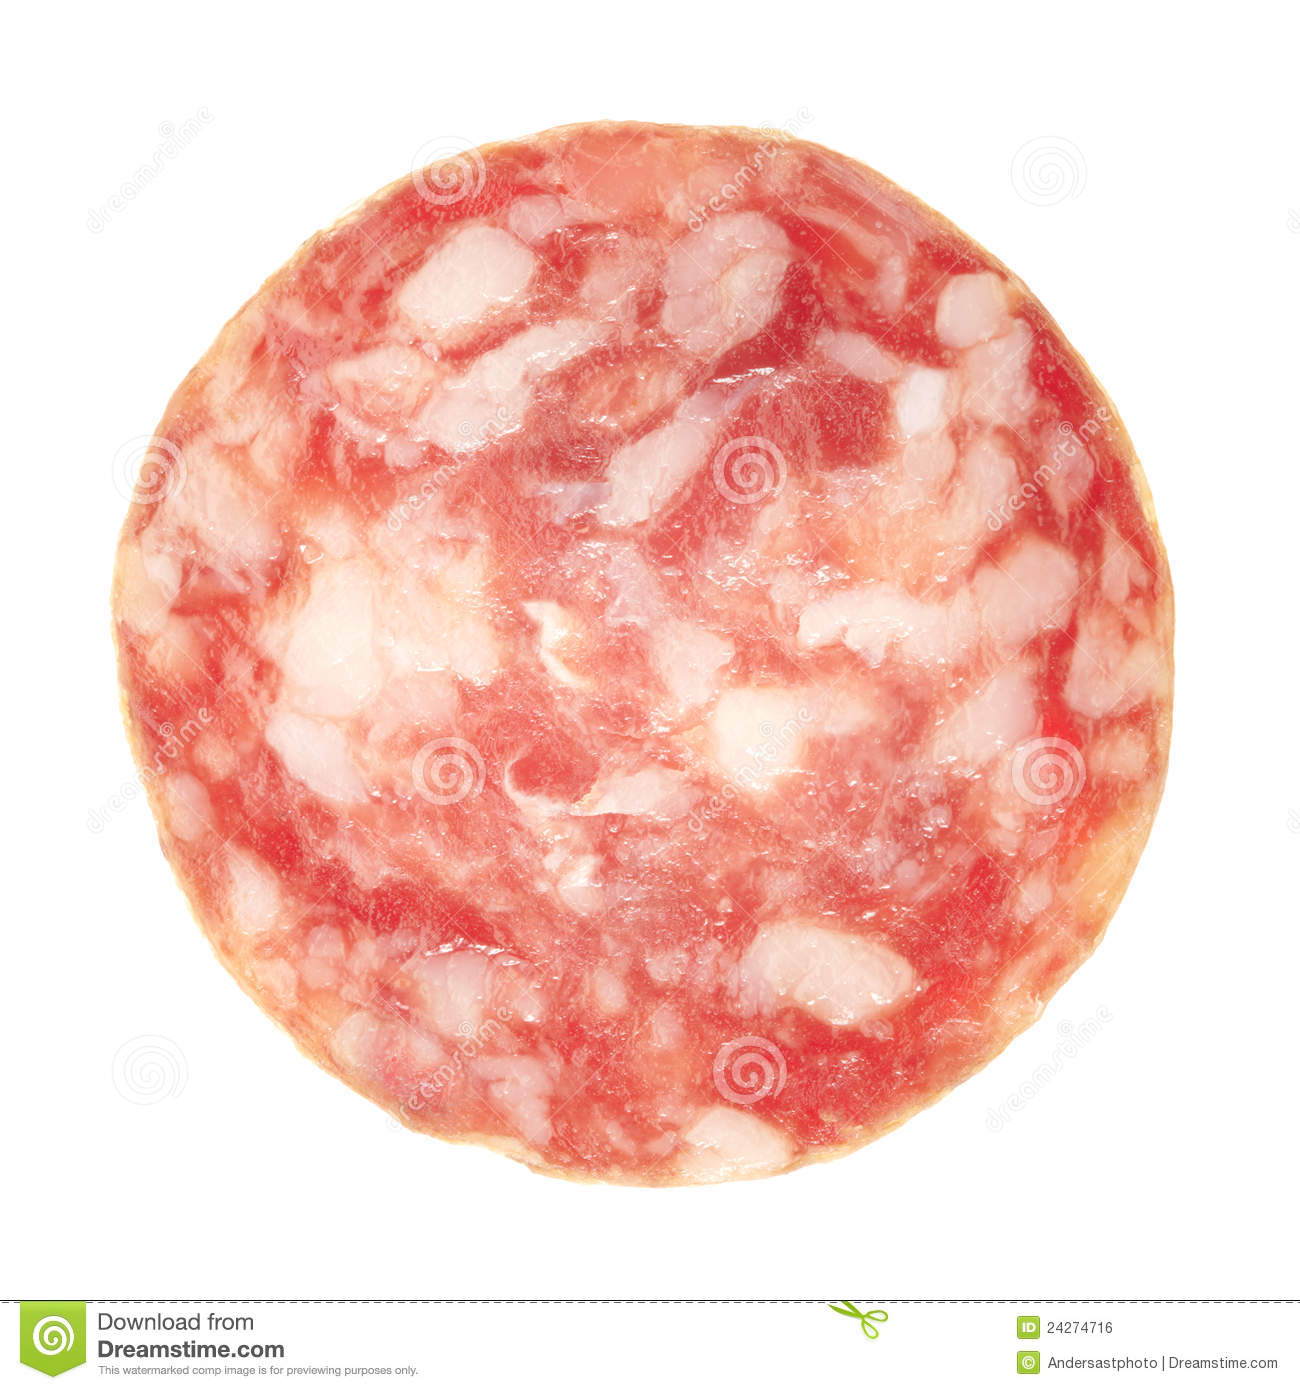 More Similar Stock Images Of   Salami Slice